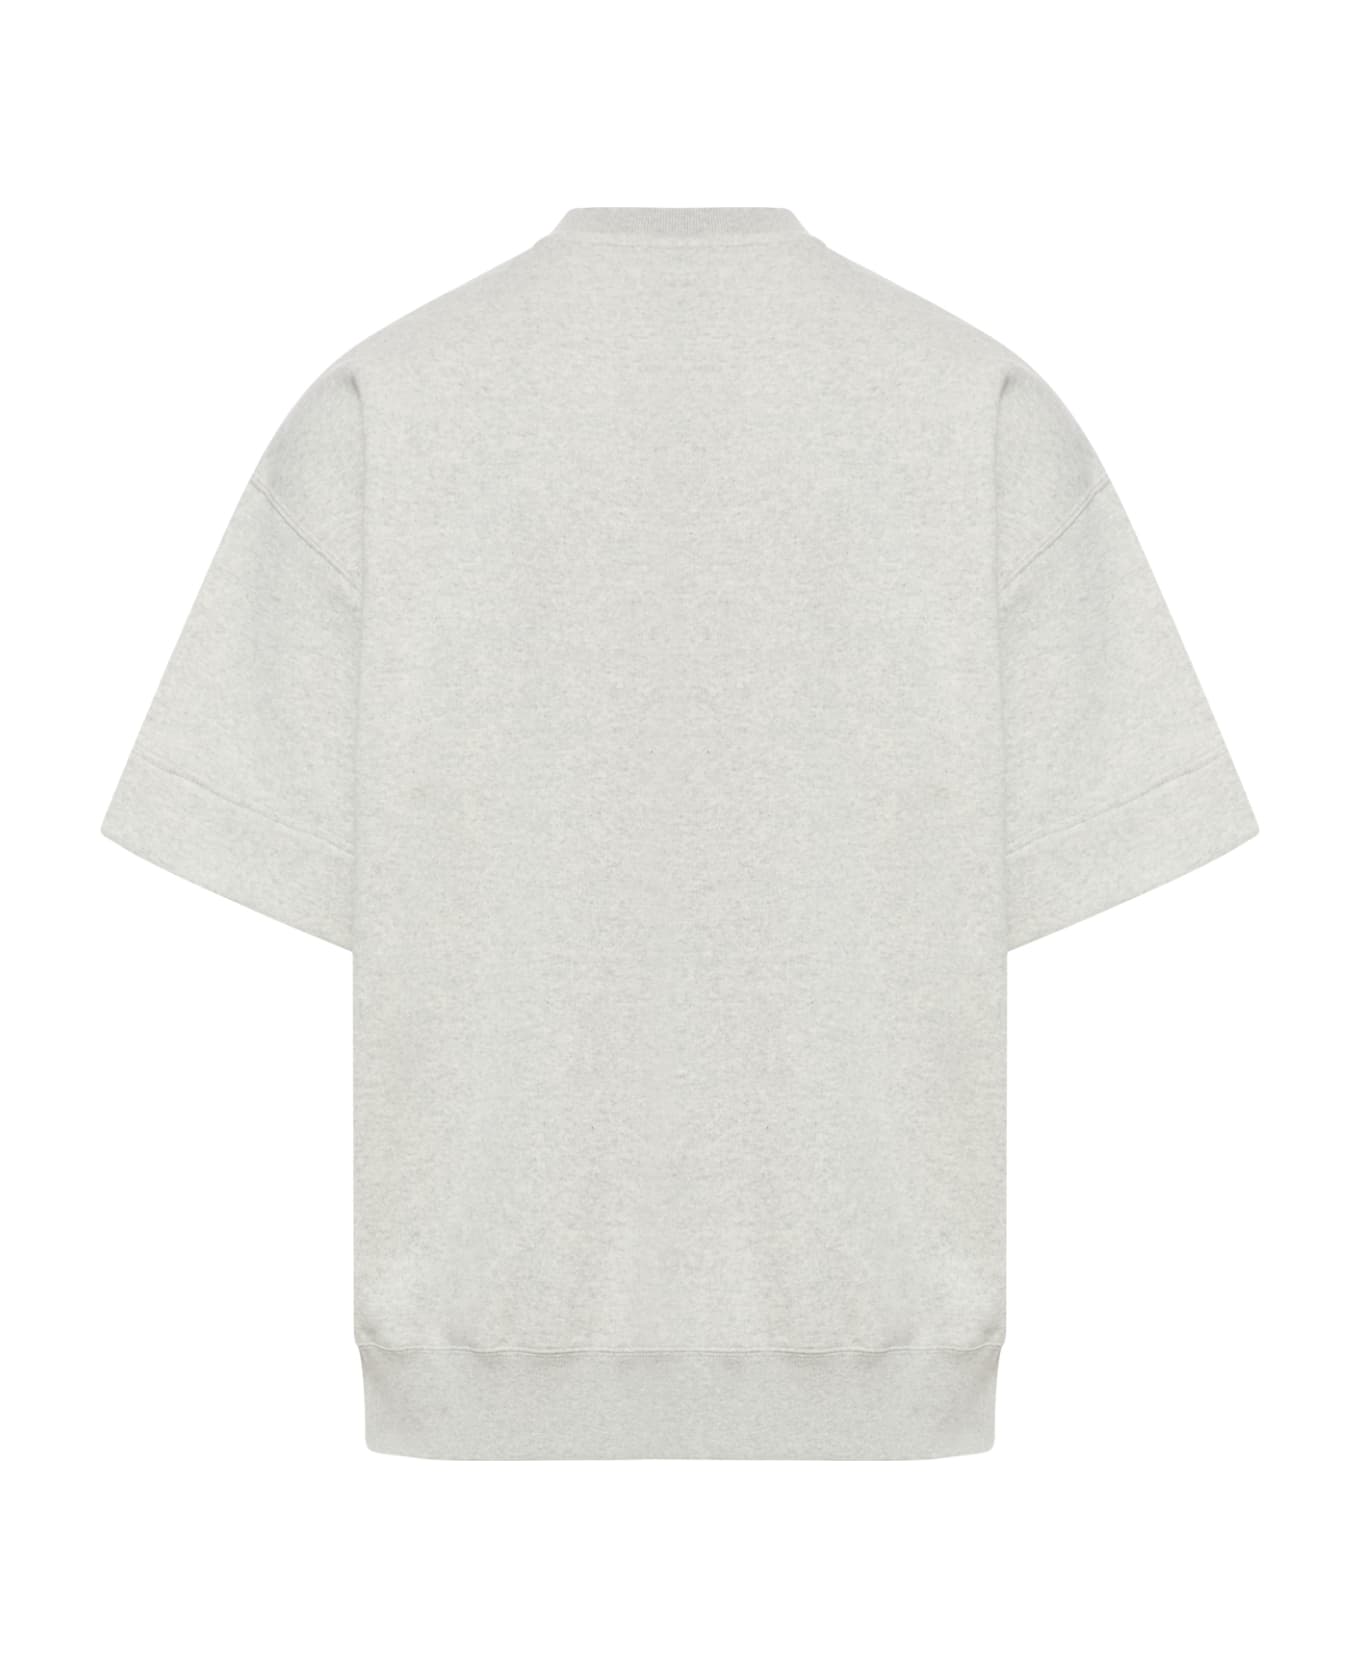 Jil Sander Crew Neck Short Sleeves T-shirt Sweatshirt - Powder Green シャツ